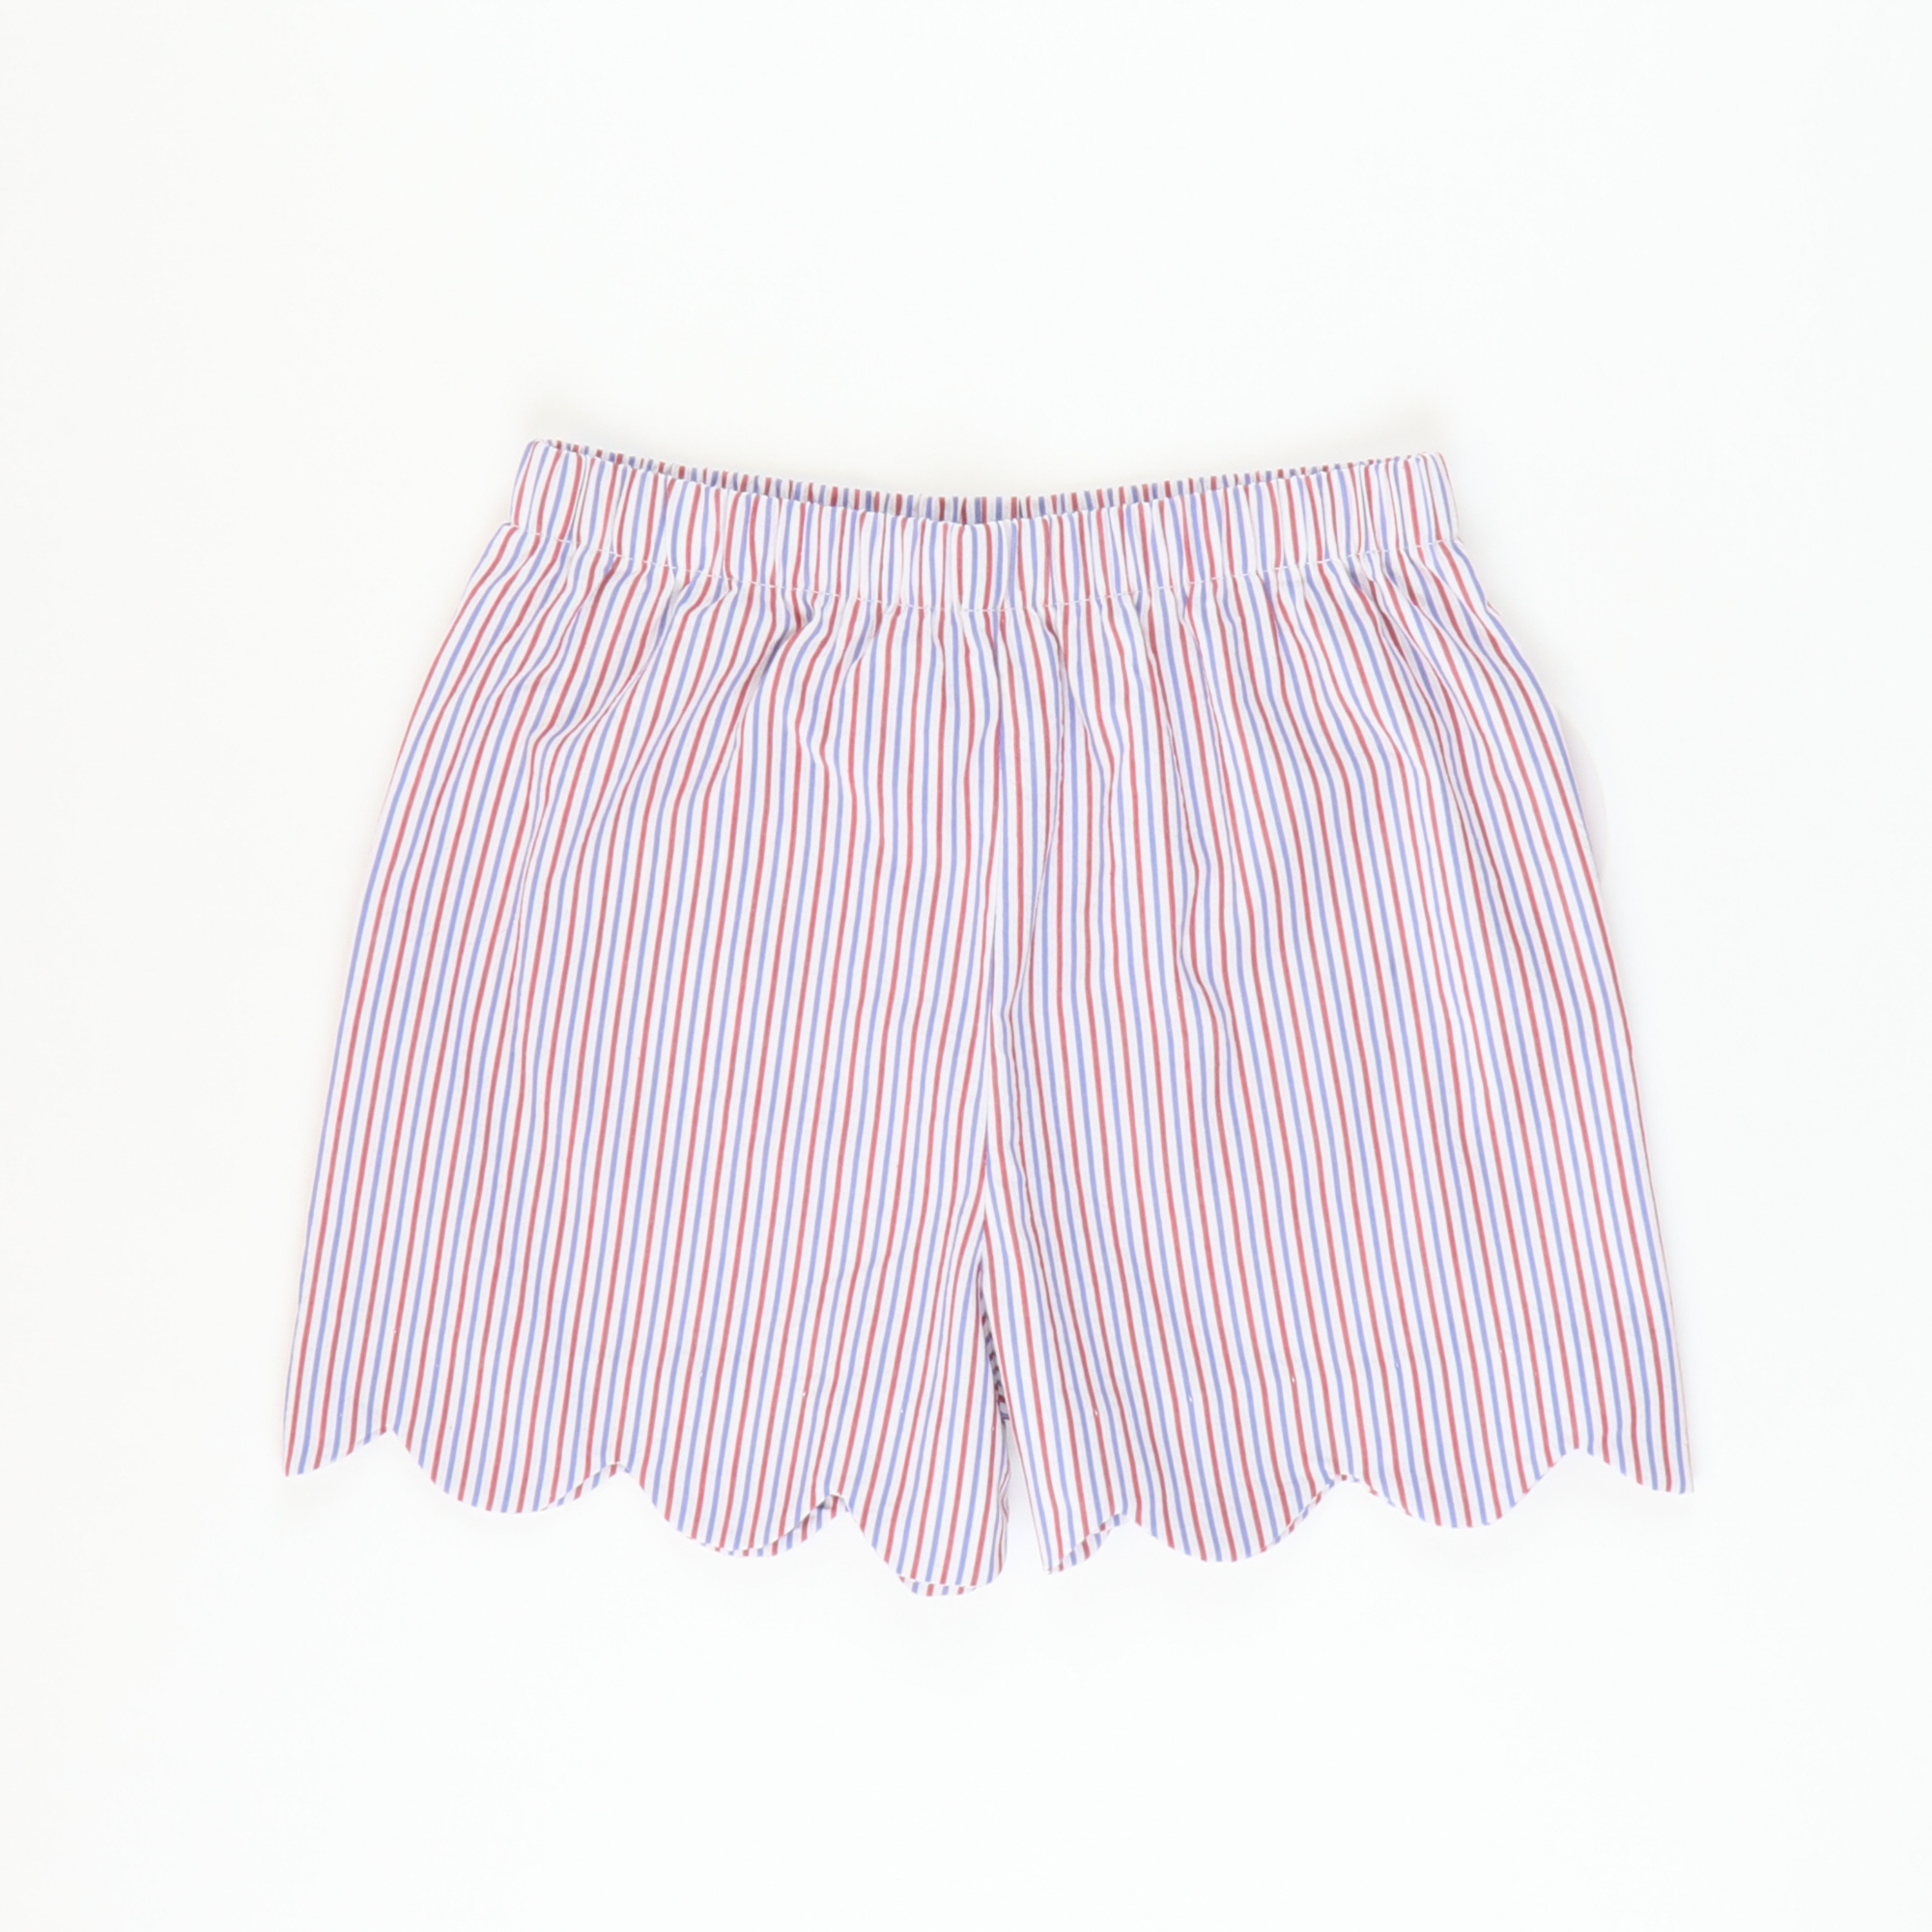 Scalloped Girl Shorts - Patriotic Stripe Seersucker - Stellybelly